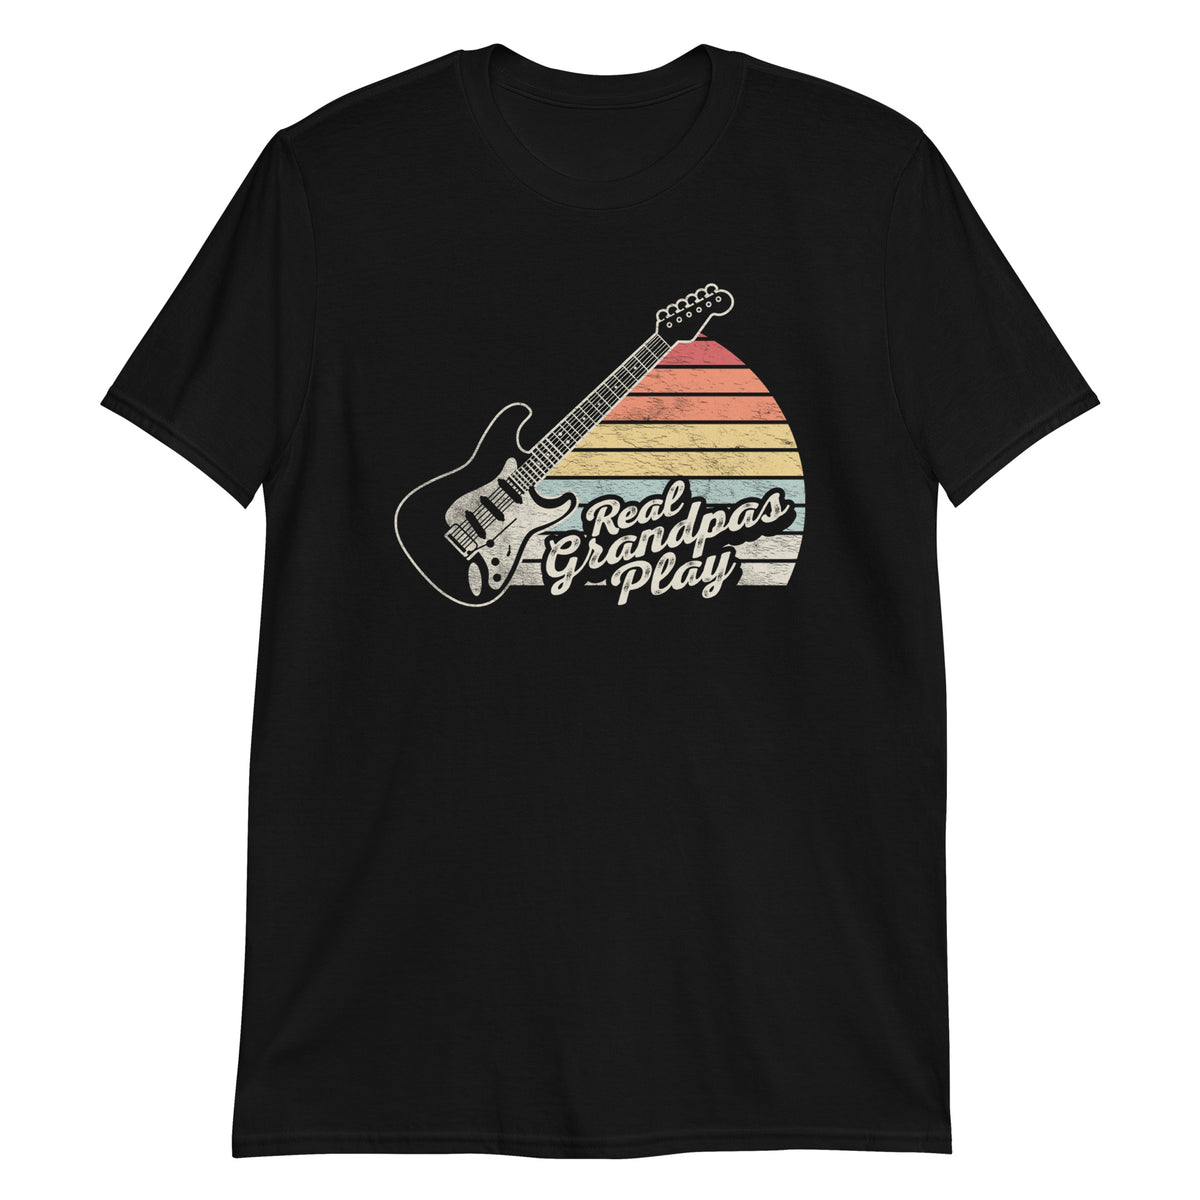 Real Granpas Play Guitar T-Shirt